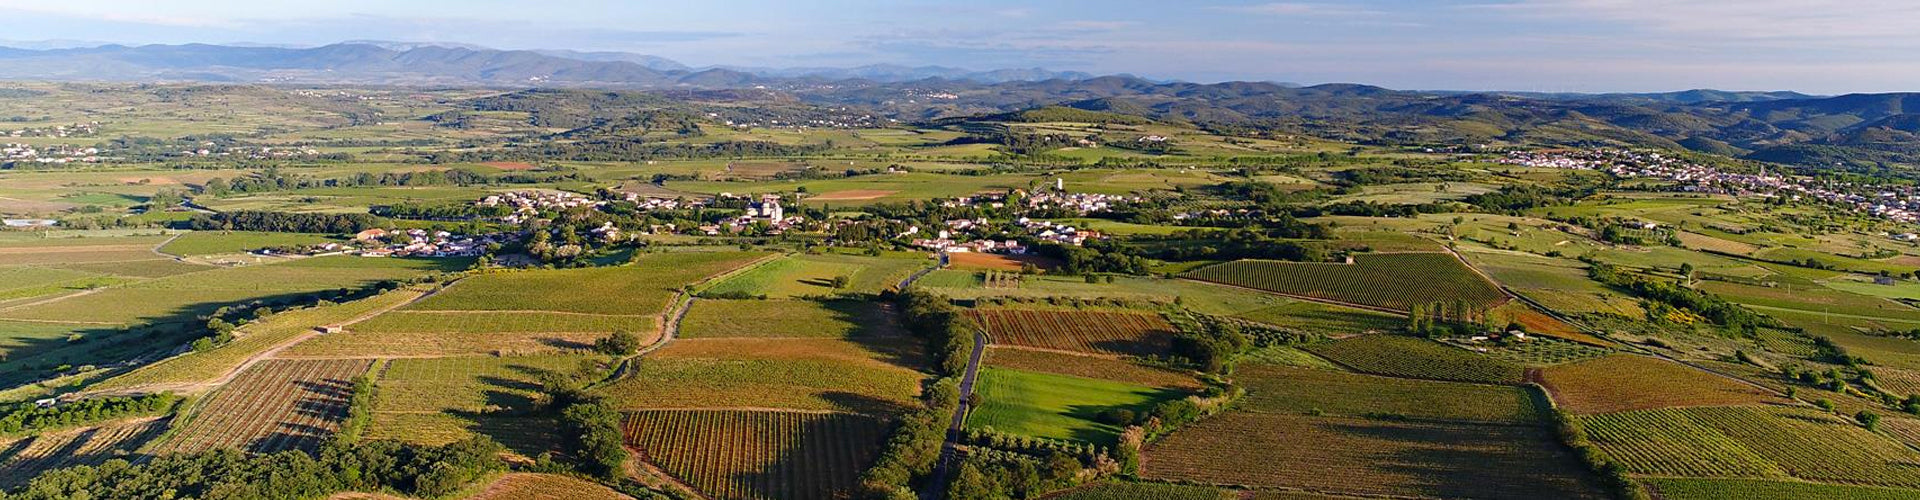 Vineyards of Alignan du Vent in the Languedoc Region of France